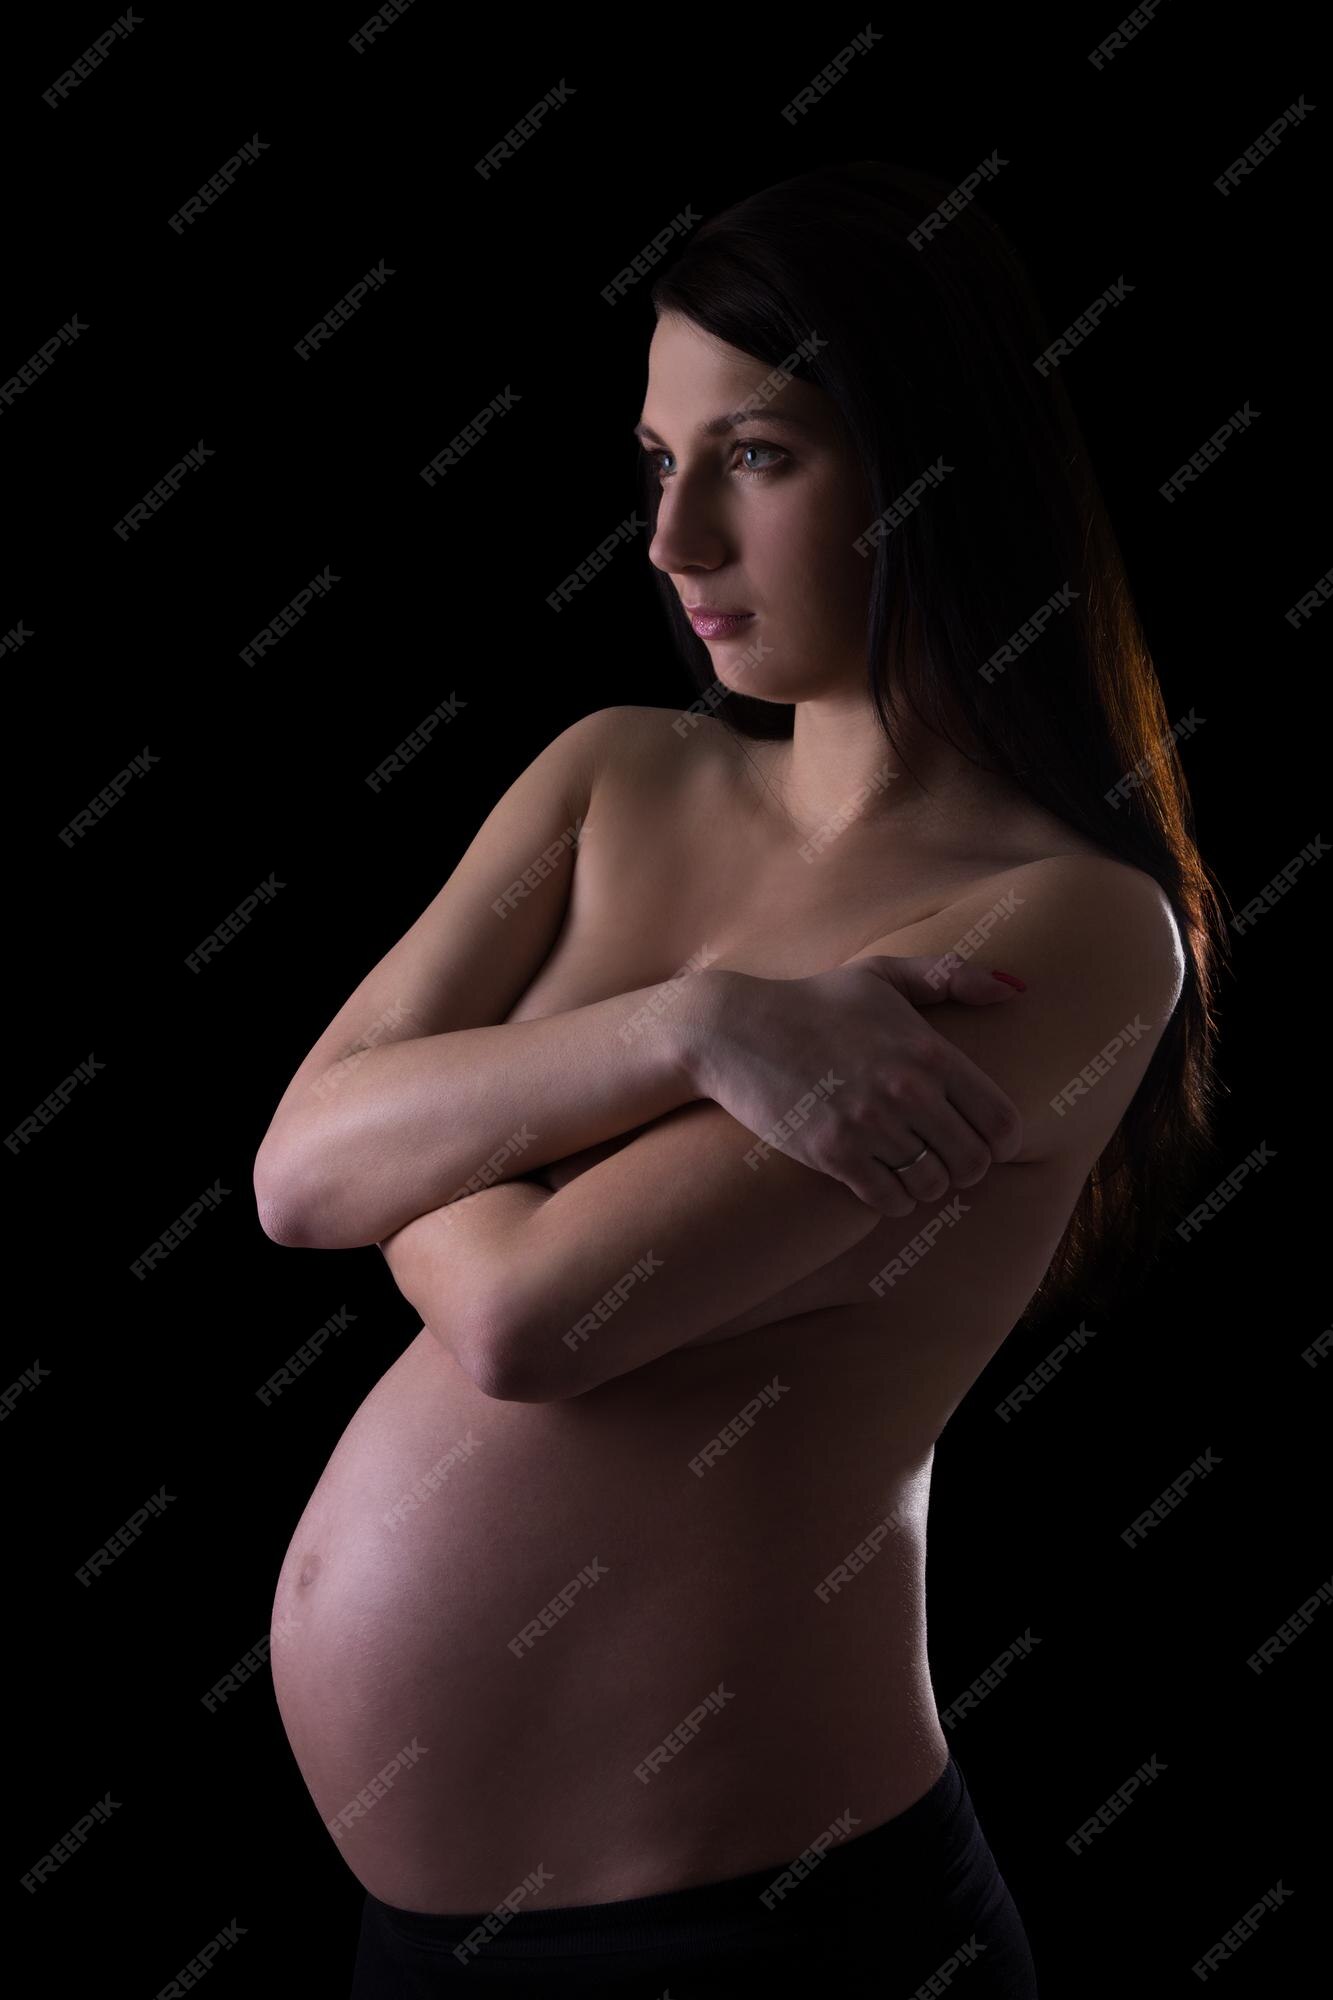 Ghetto Pregnant Nude - Premium Photo | Naked pregnant woman isolated on black background